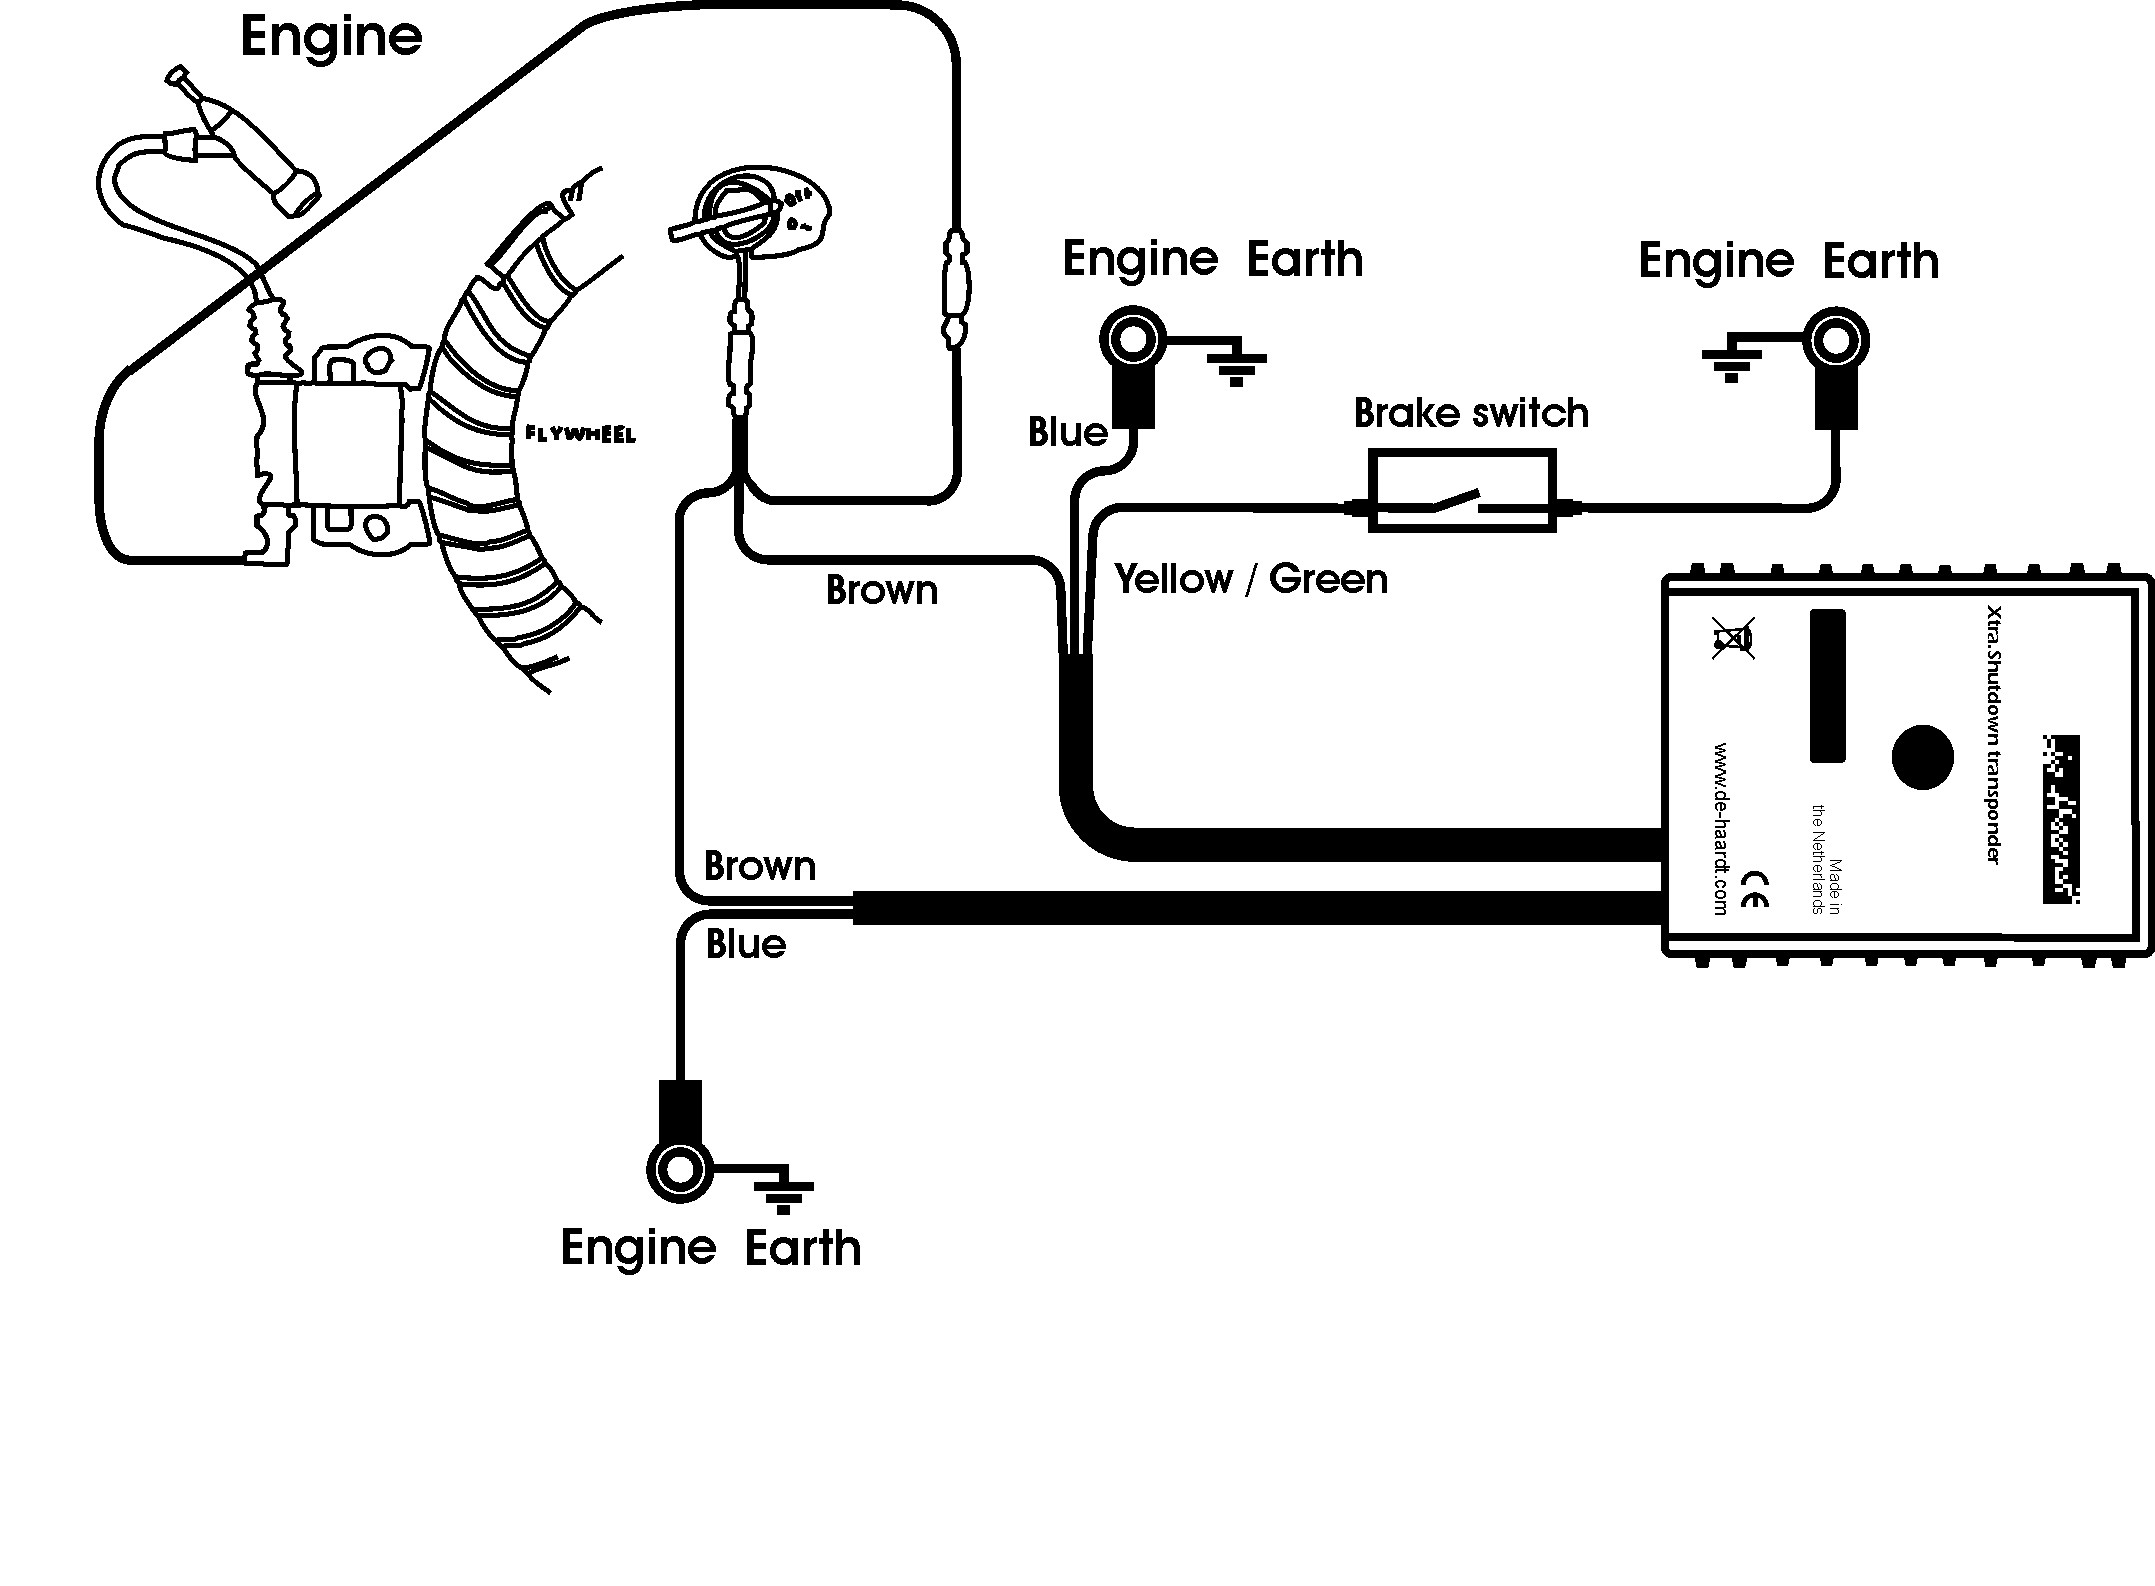 Diagram Honda Gx340 Starter Wiring Diagram Full Version Hd Quality Wiring Diagram Diagrampopart Mybulgaria It